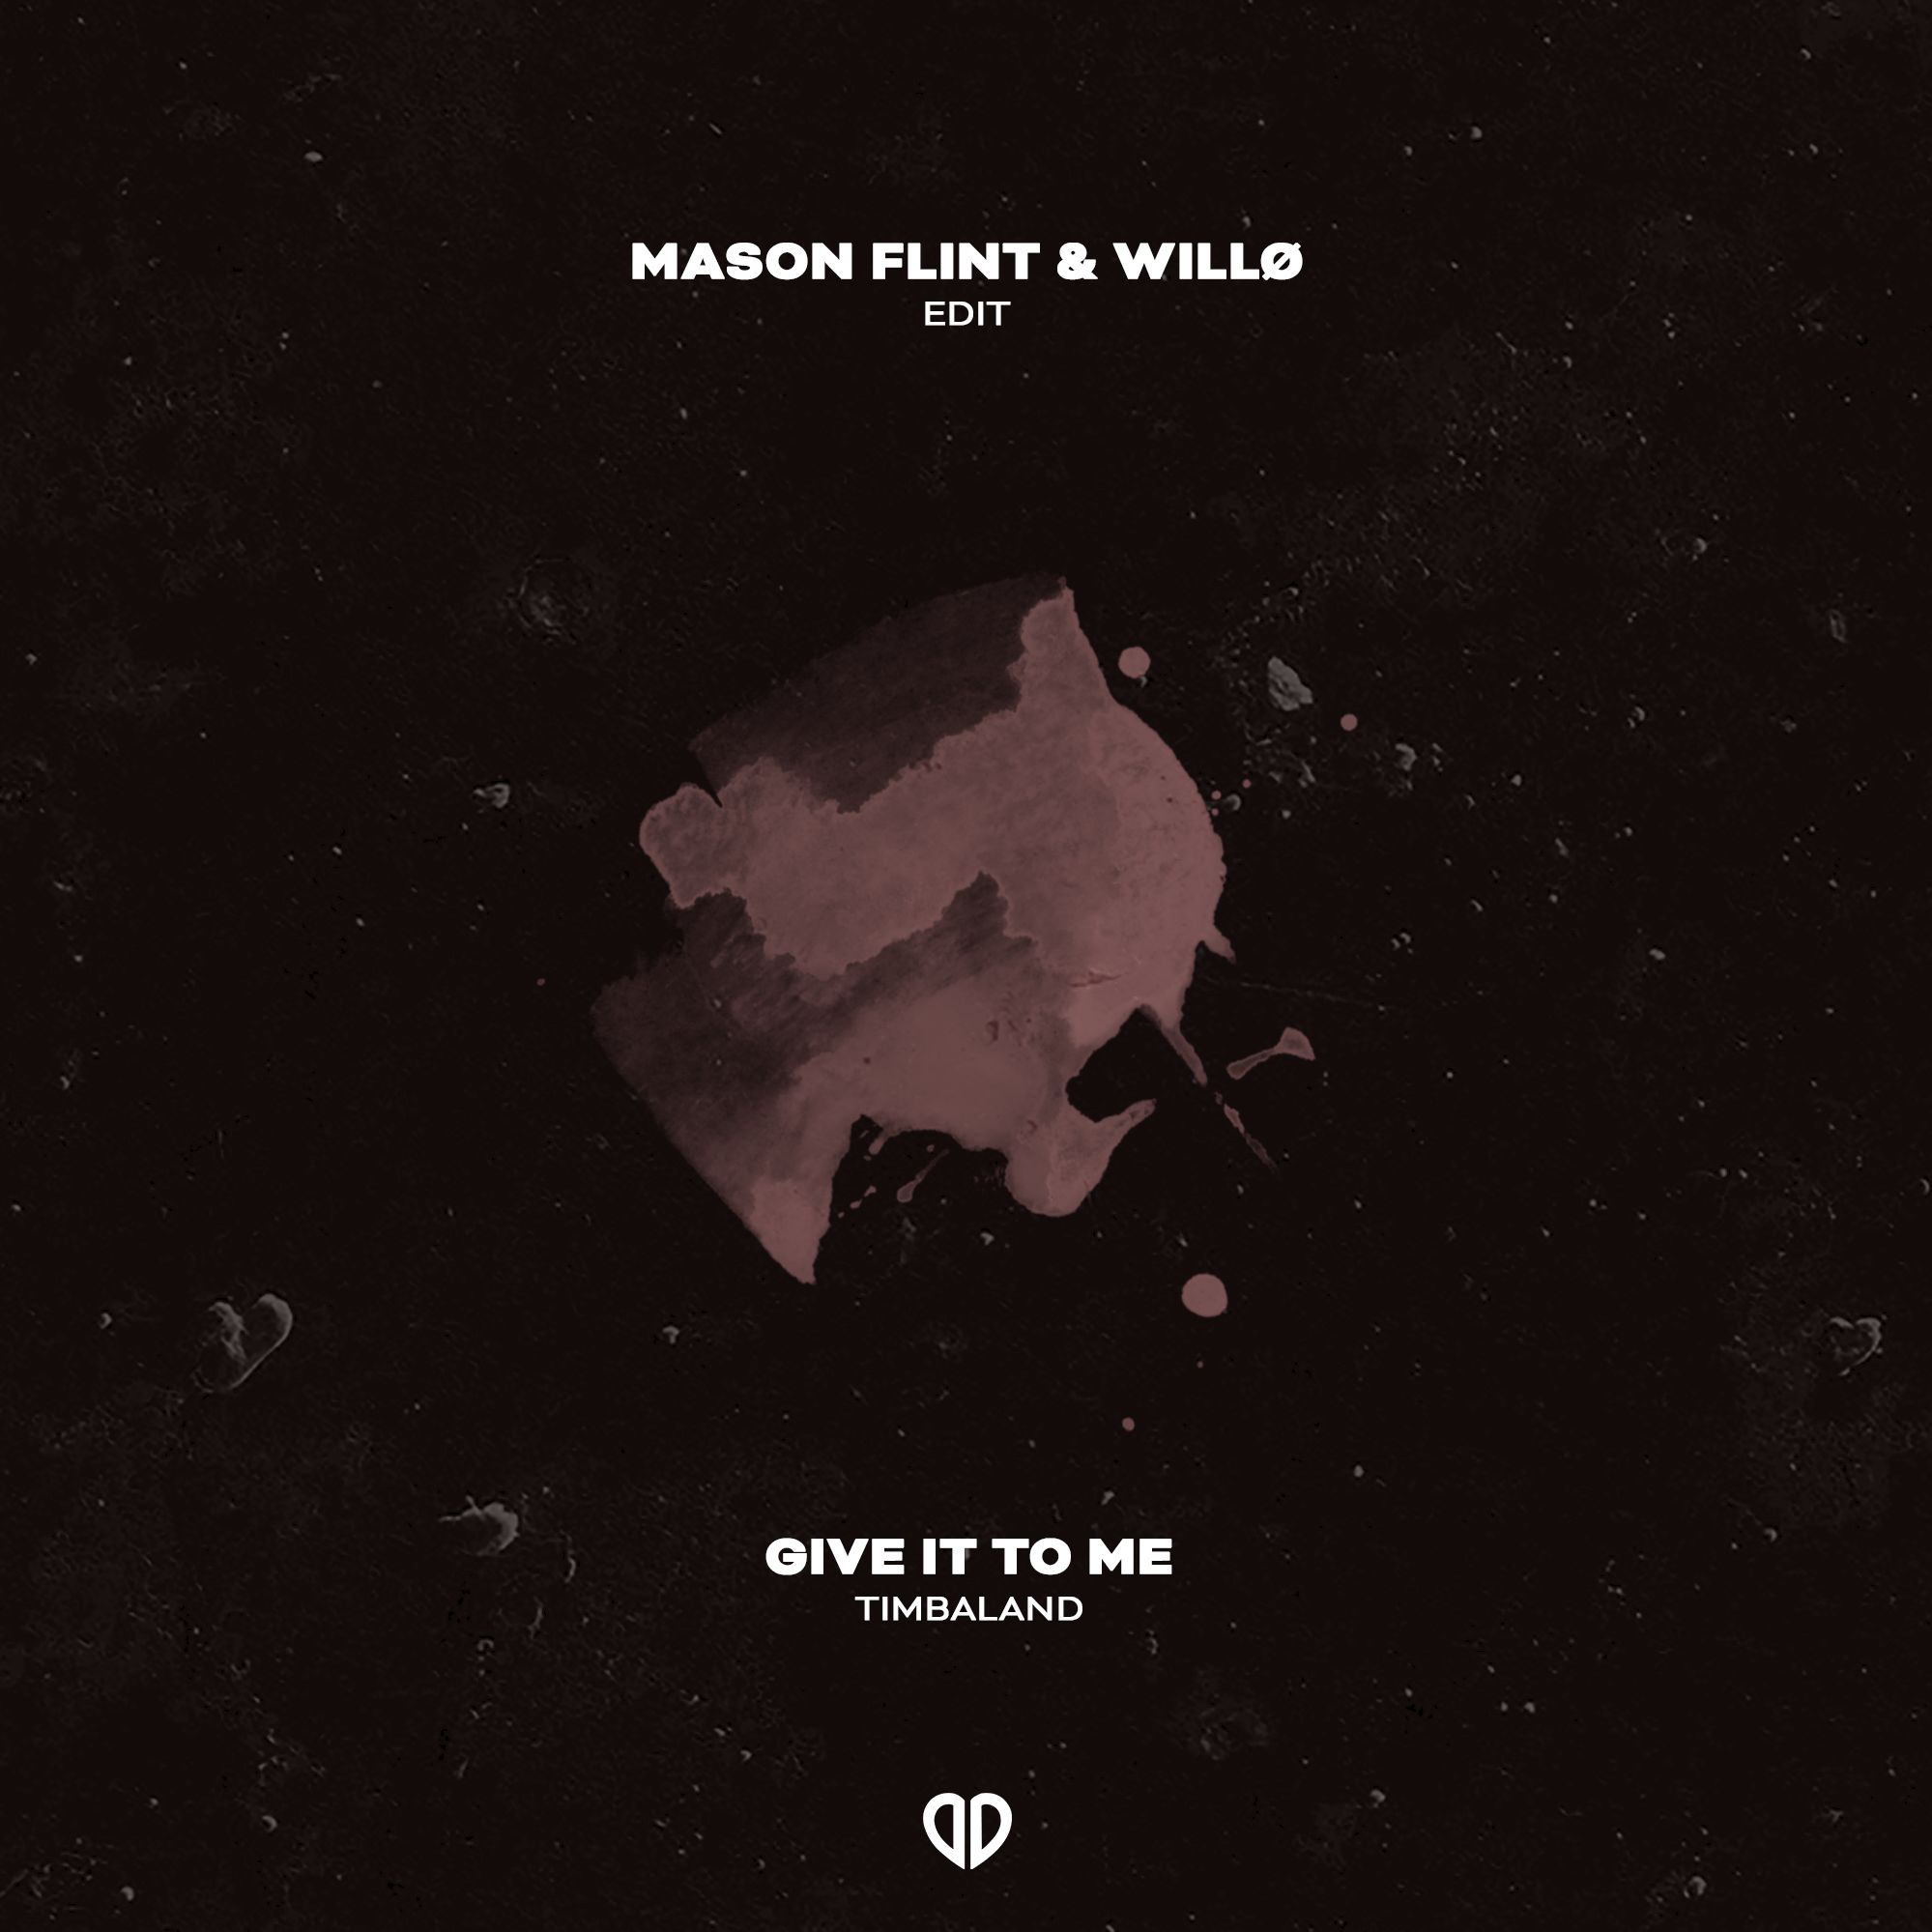 Dhawunirodha Timbaland - Give It To Me (Mason Flint & Willo Edit) [DropUnited Exclusive]